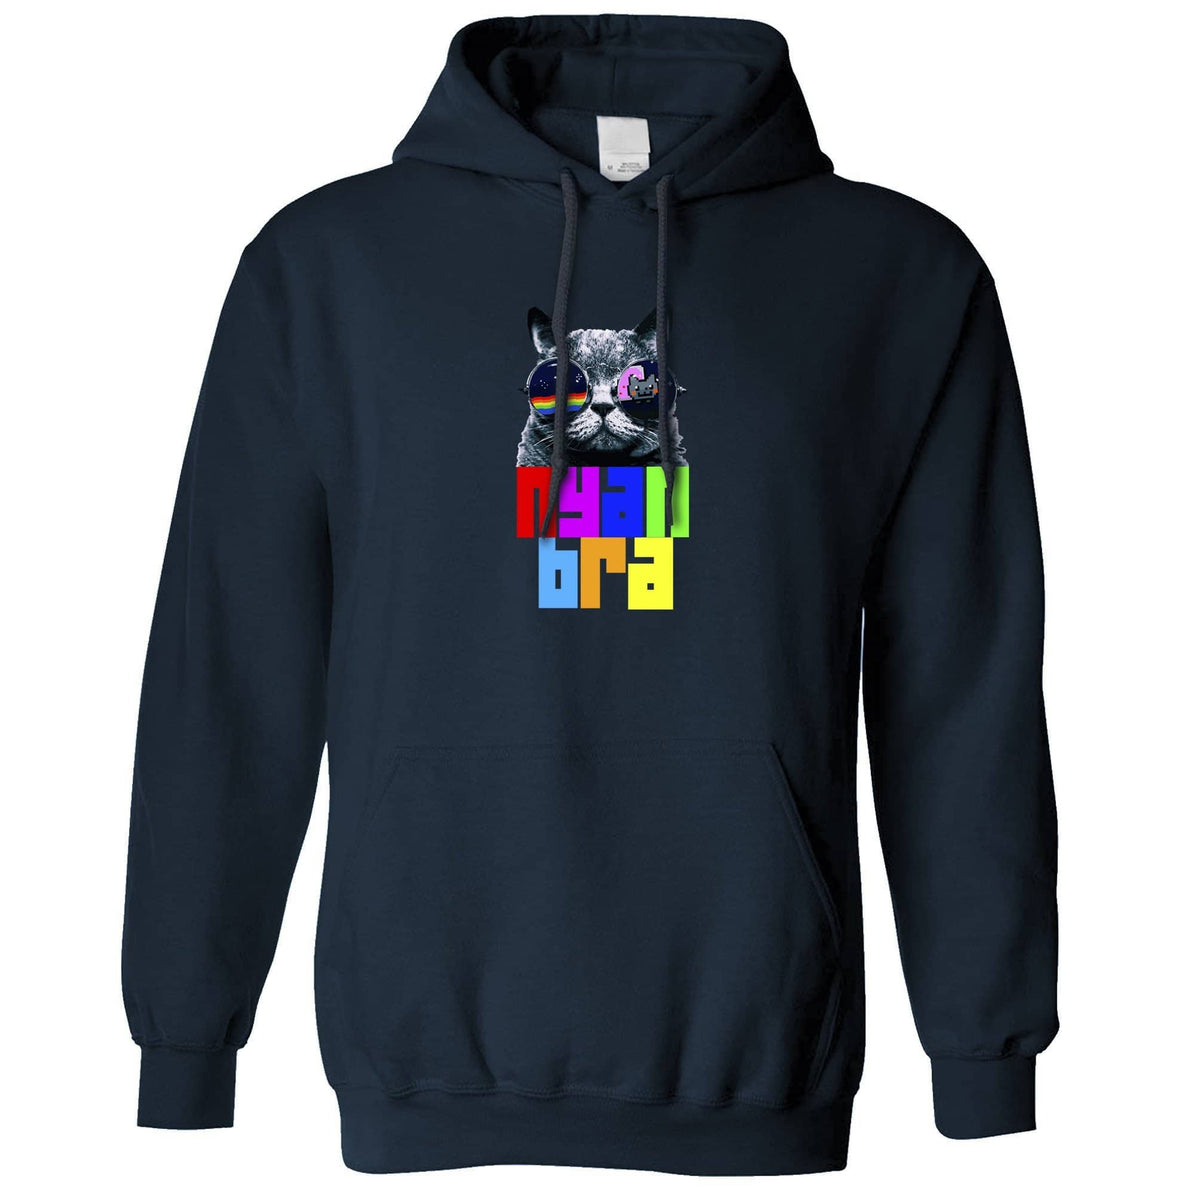 Nyan Cat Hoodie - Internet Meme Present Gift - Shirtbox